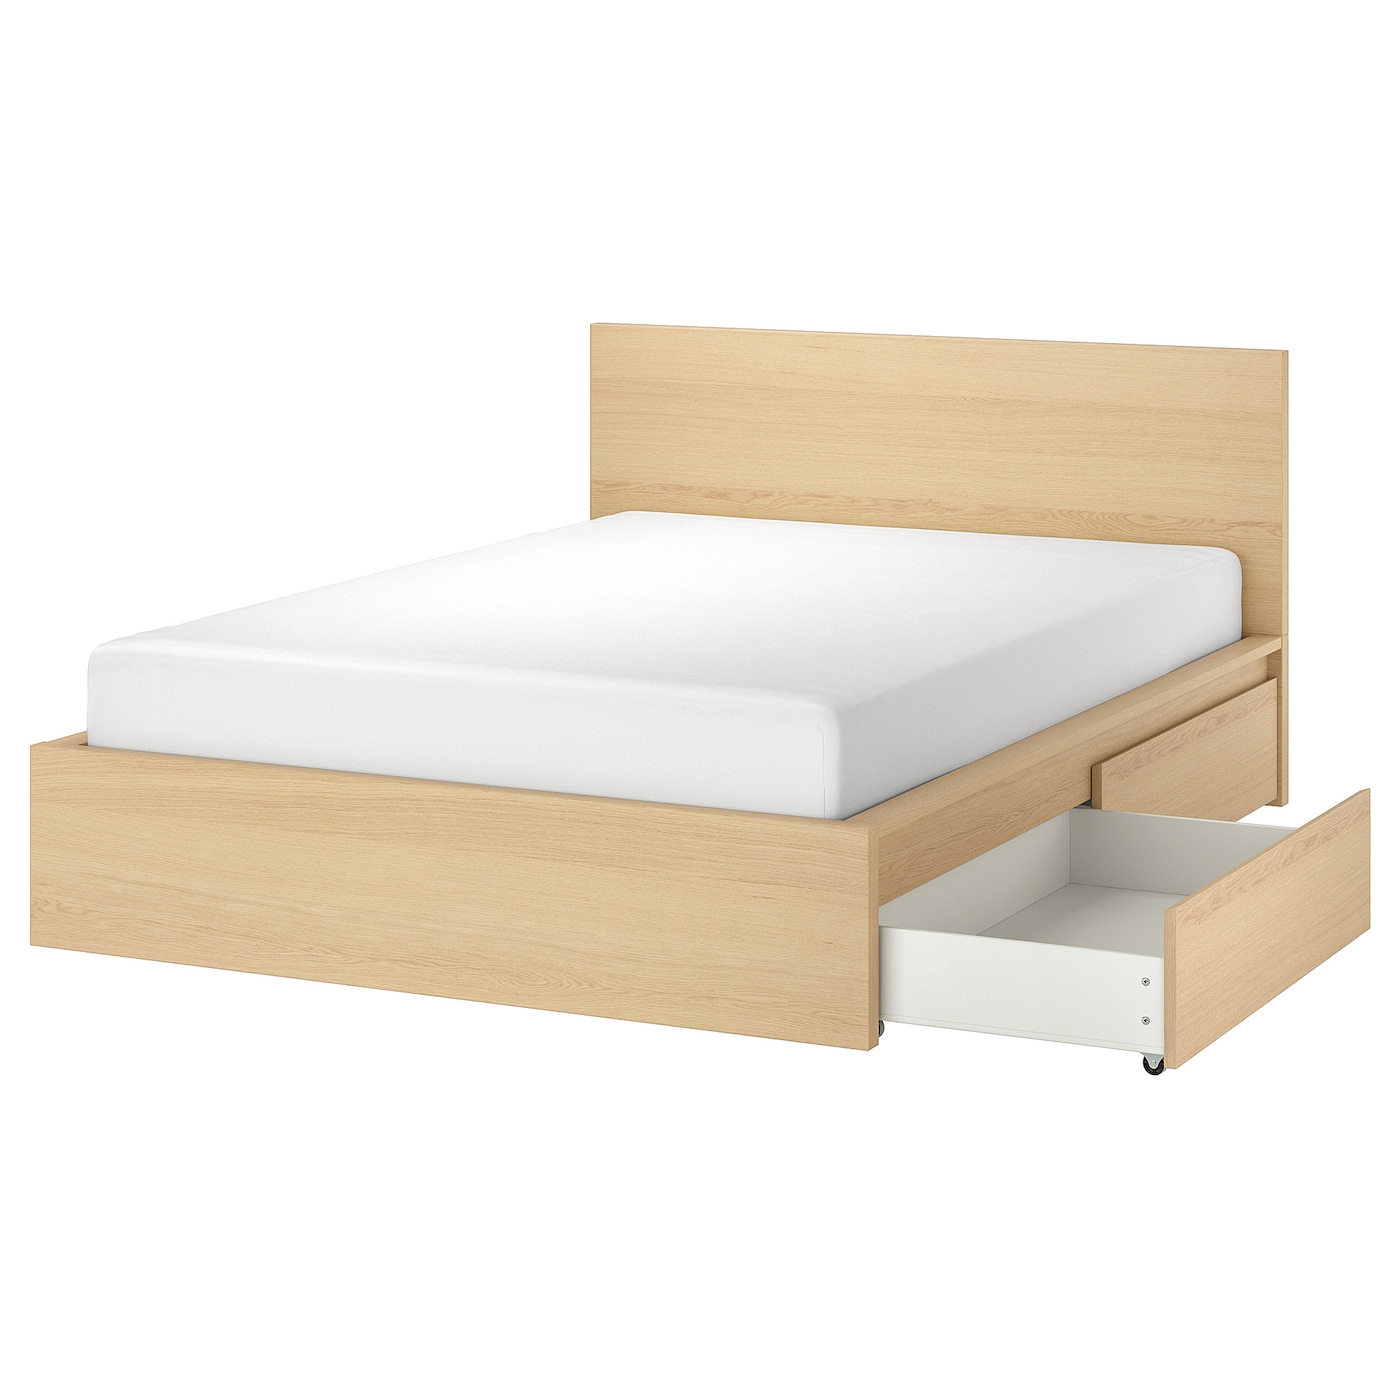 Каркас кровати с 4 ящиками для хранения - IKEA MALM, 200х140 см, шпон беленого мореного дуба, МАЛЬМ ИКЕА